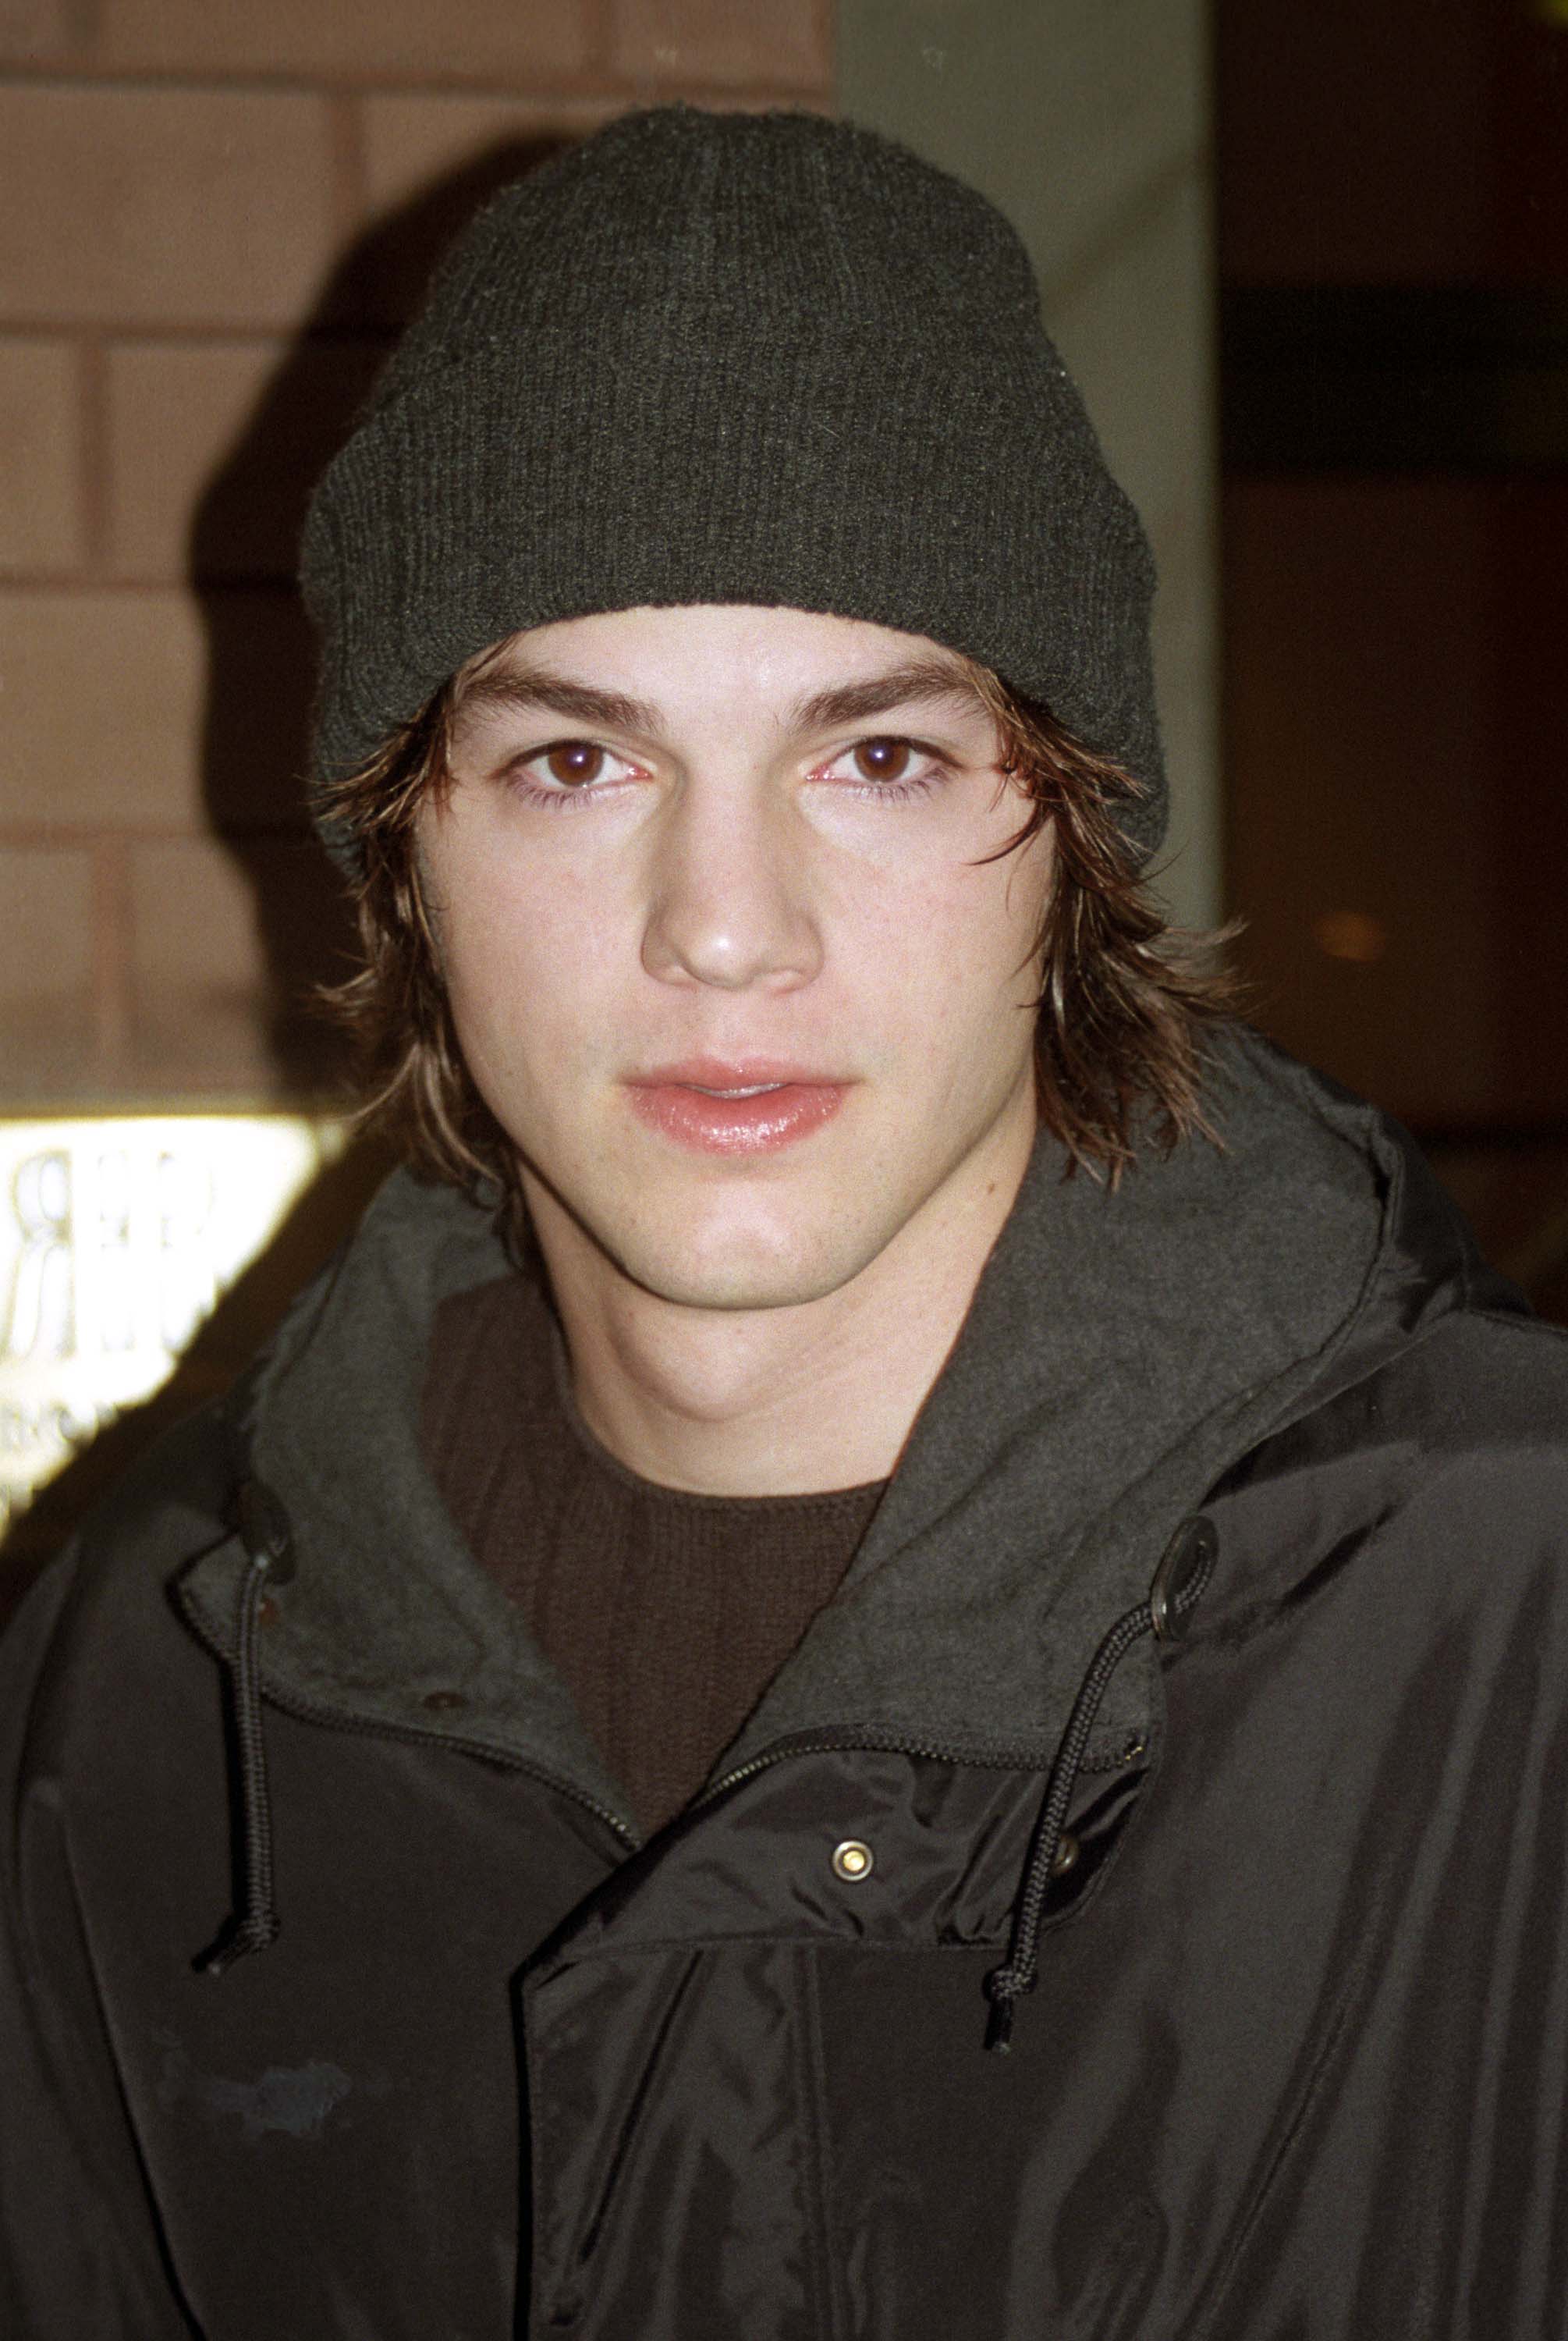 Ashton Kutcher during Ashton Kutcher sighting at the Rihga Royal Hotel - December 13, 2001, at Rihga Royal Hotel in New York City, New York, United States. | Source: Getty Images